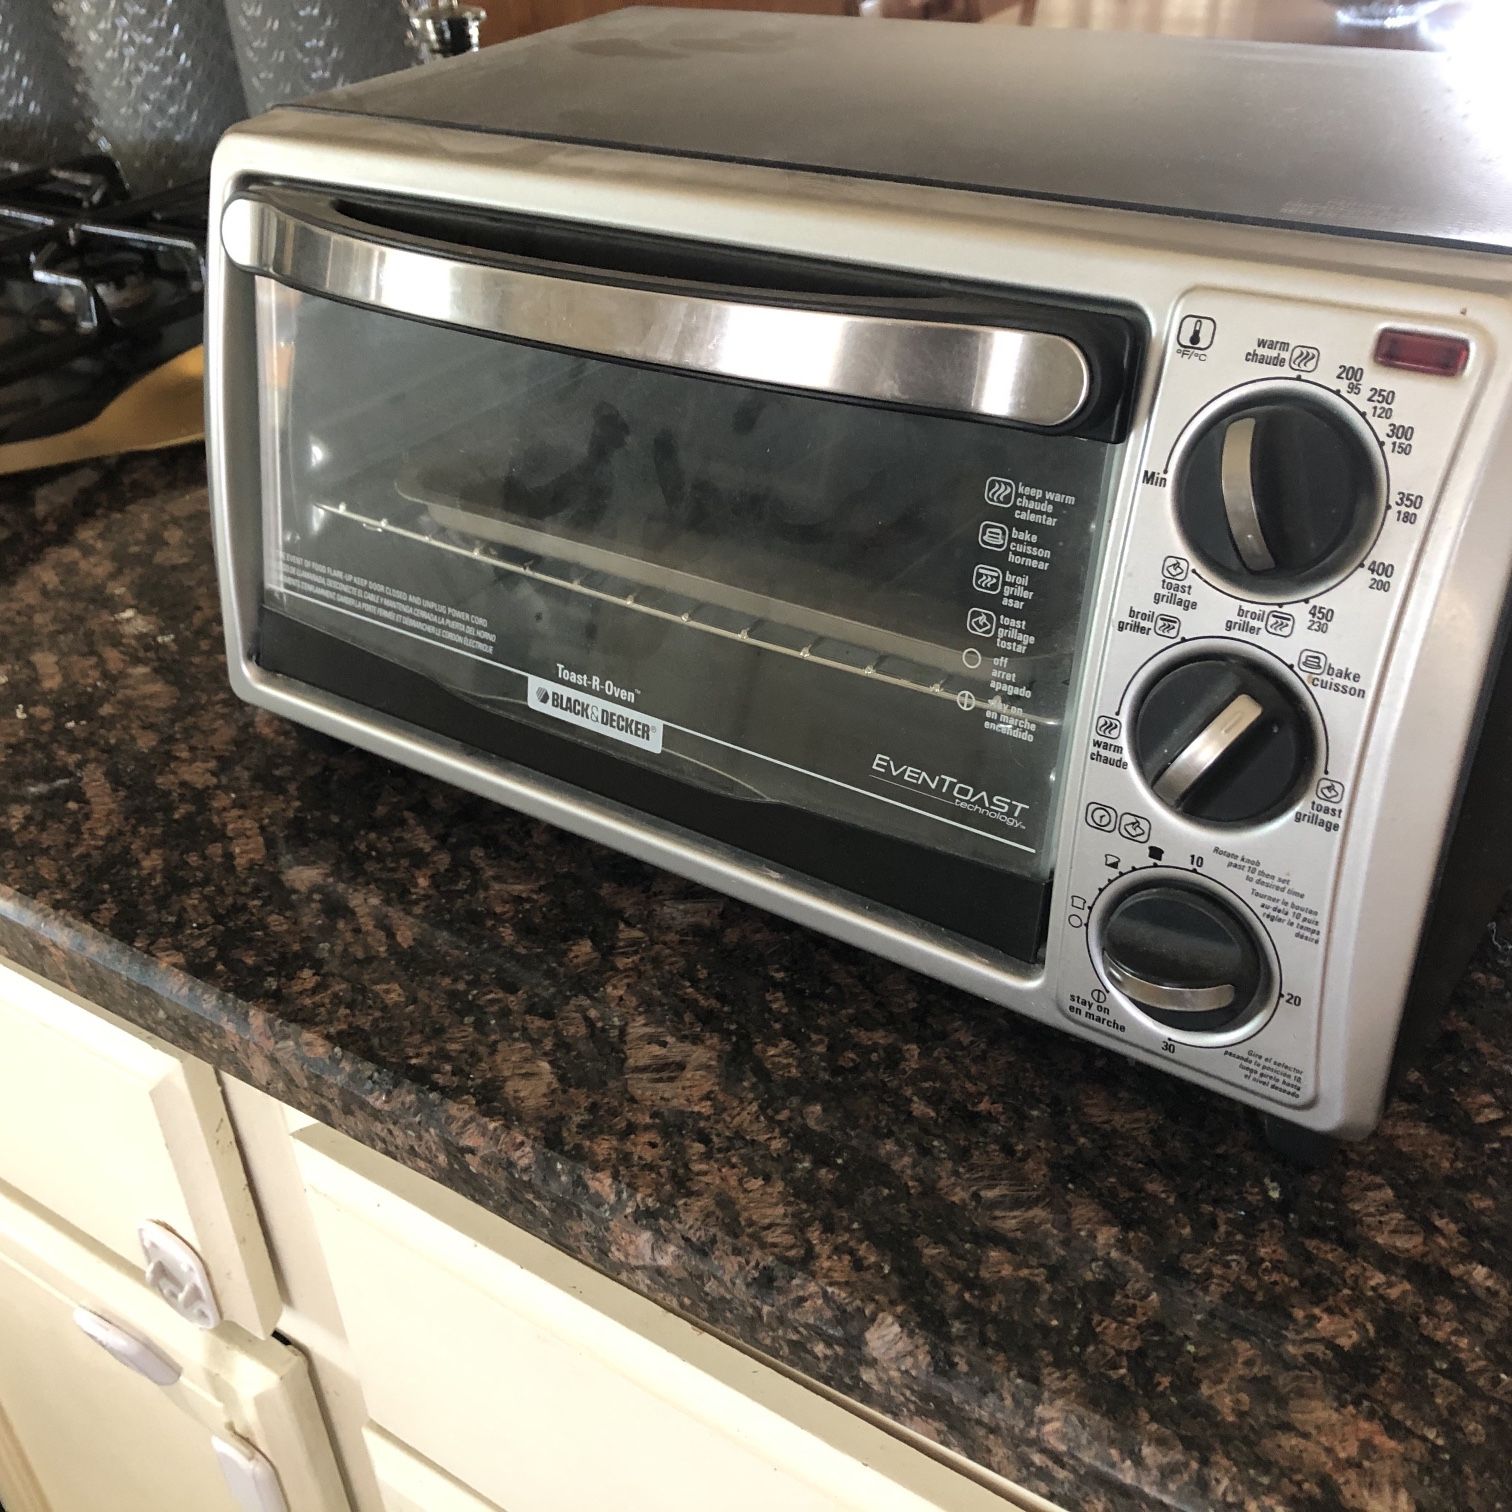 Black & Decker Toast R Oven for Sale in El Paso, TX - OfferUp